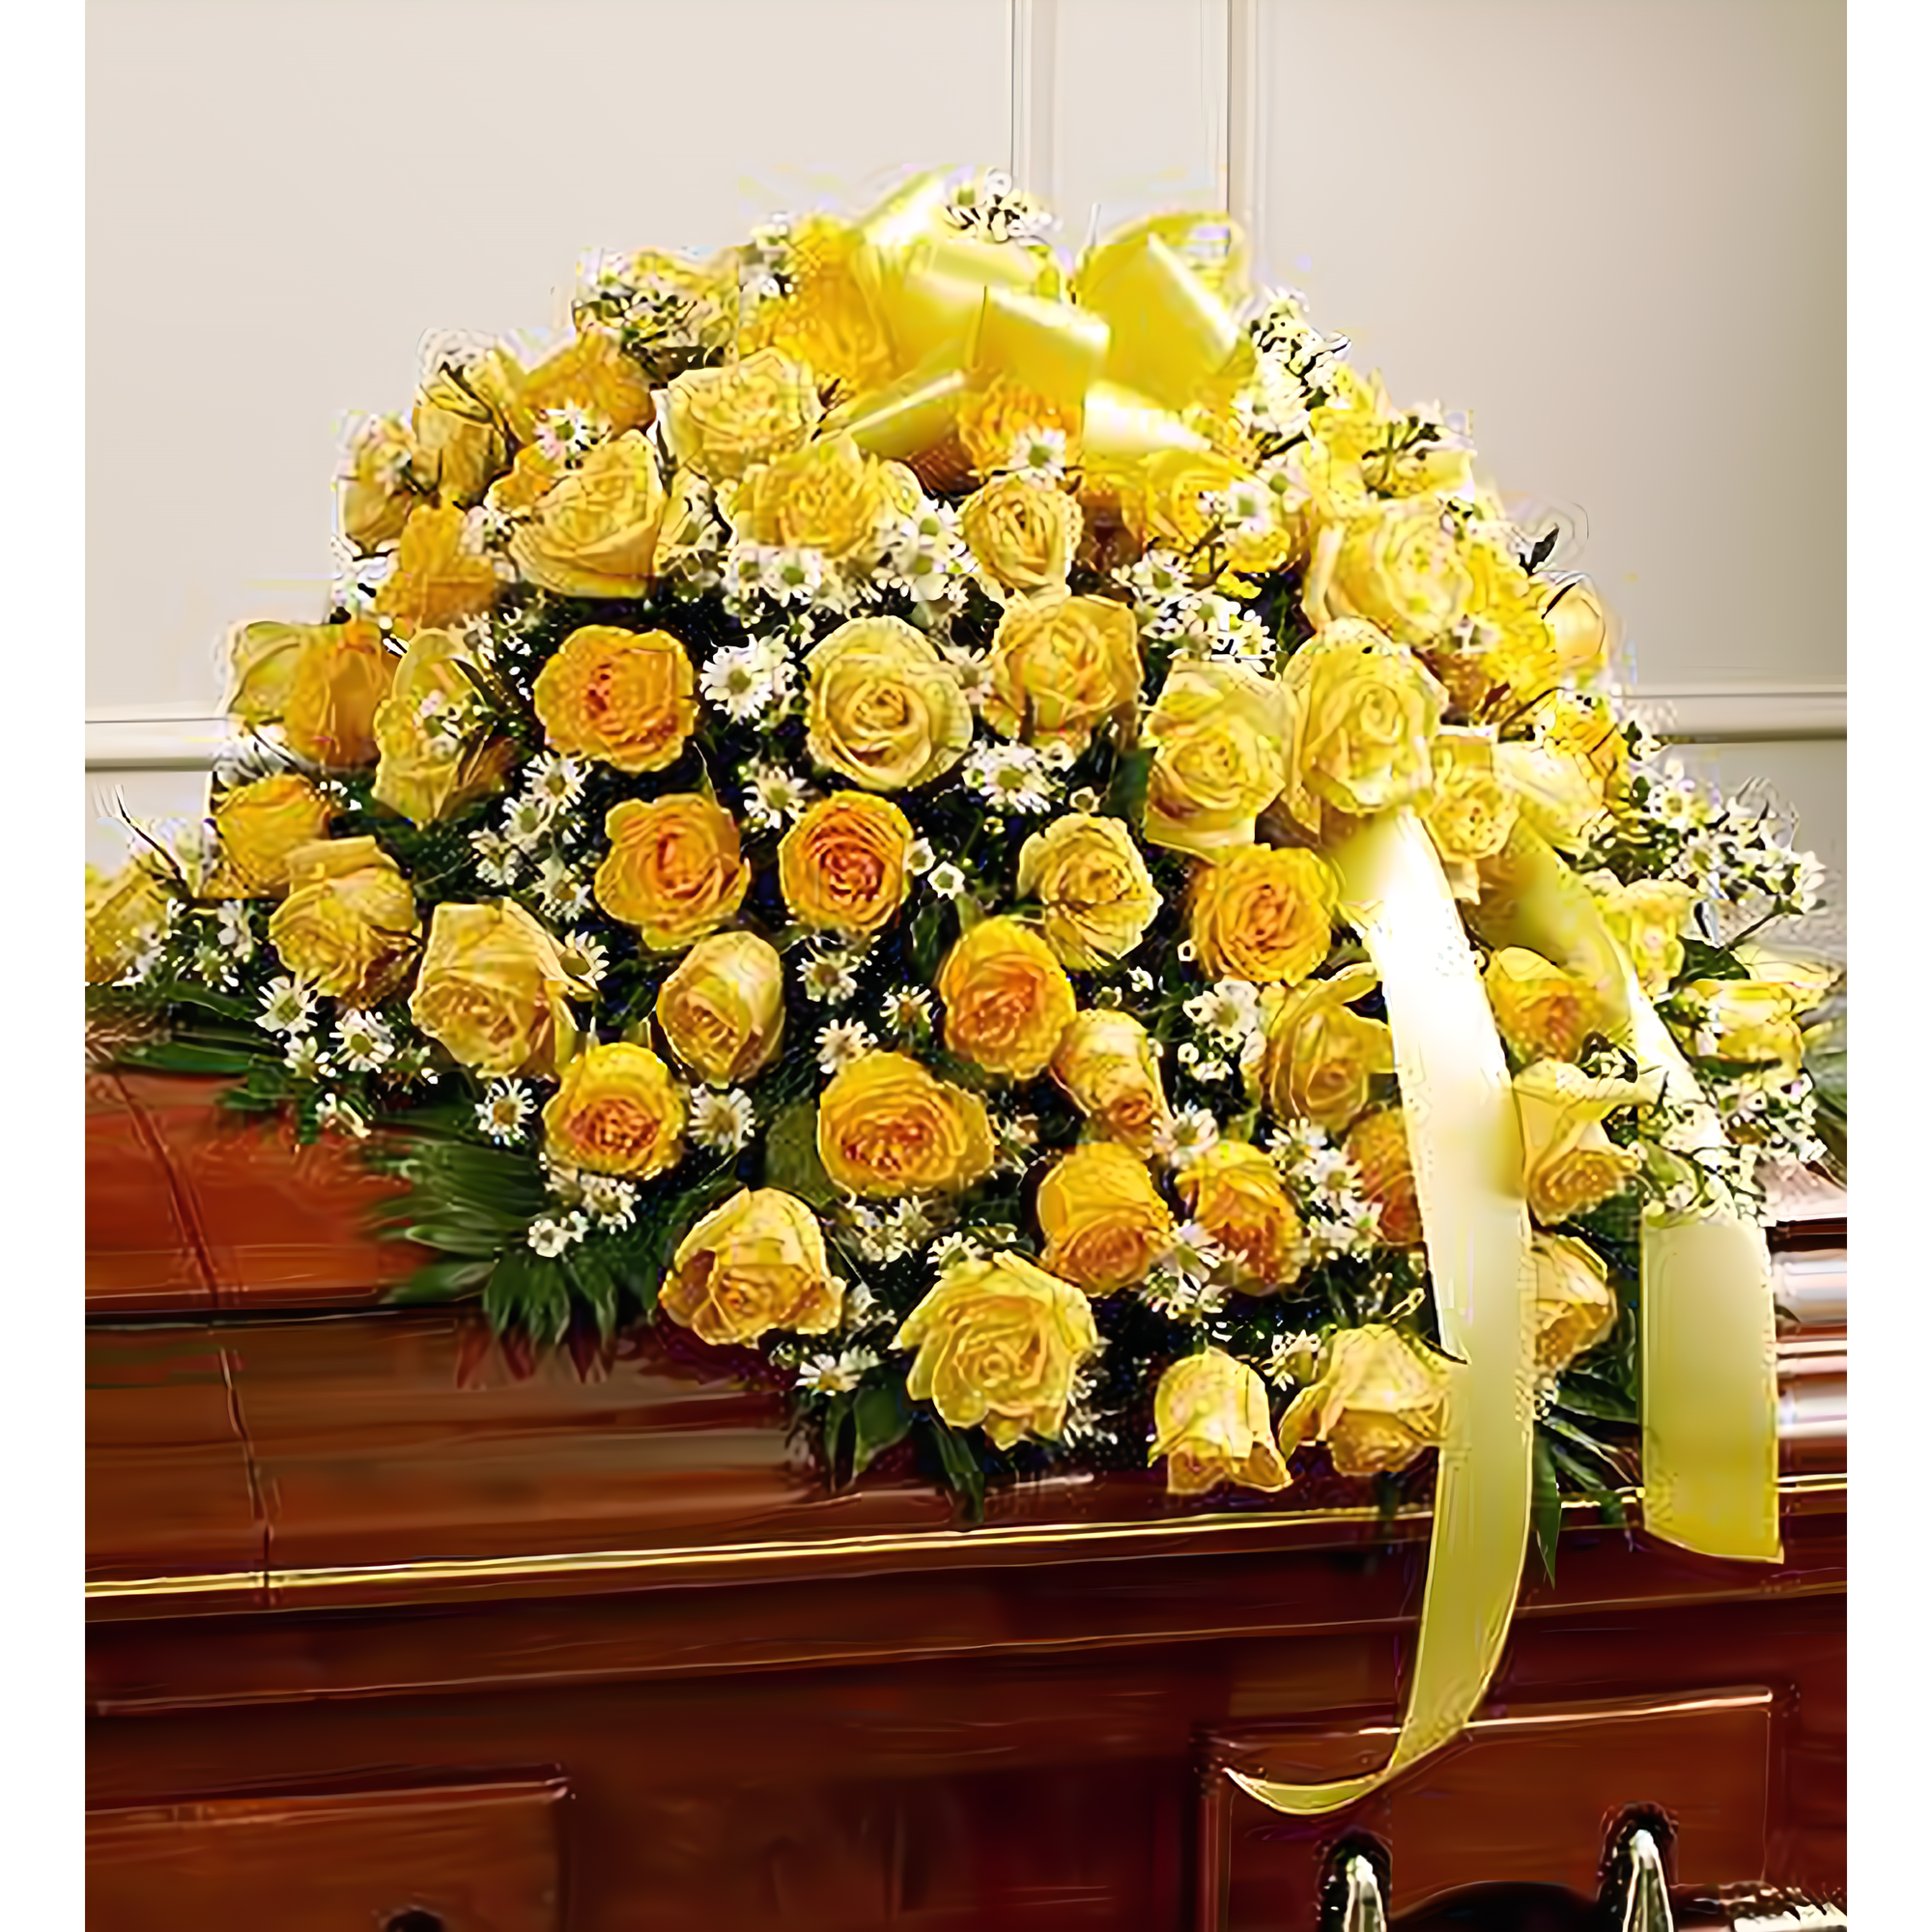 Manhattan Flower Delivery - Cherished Memories Rose Half Casket Cover - Yellow - Funeral > Casket Sprays